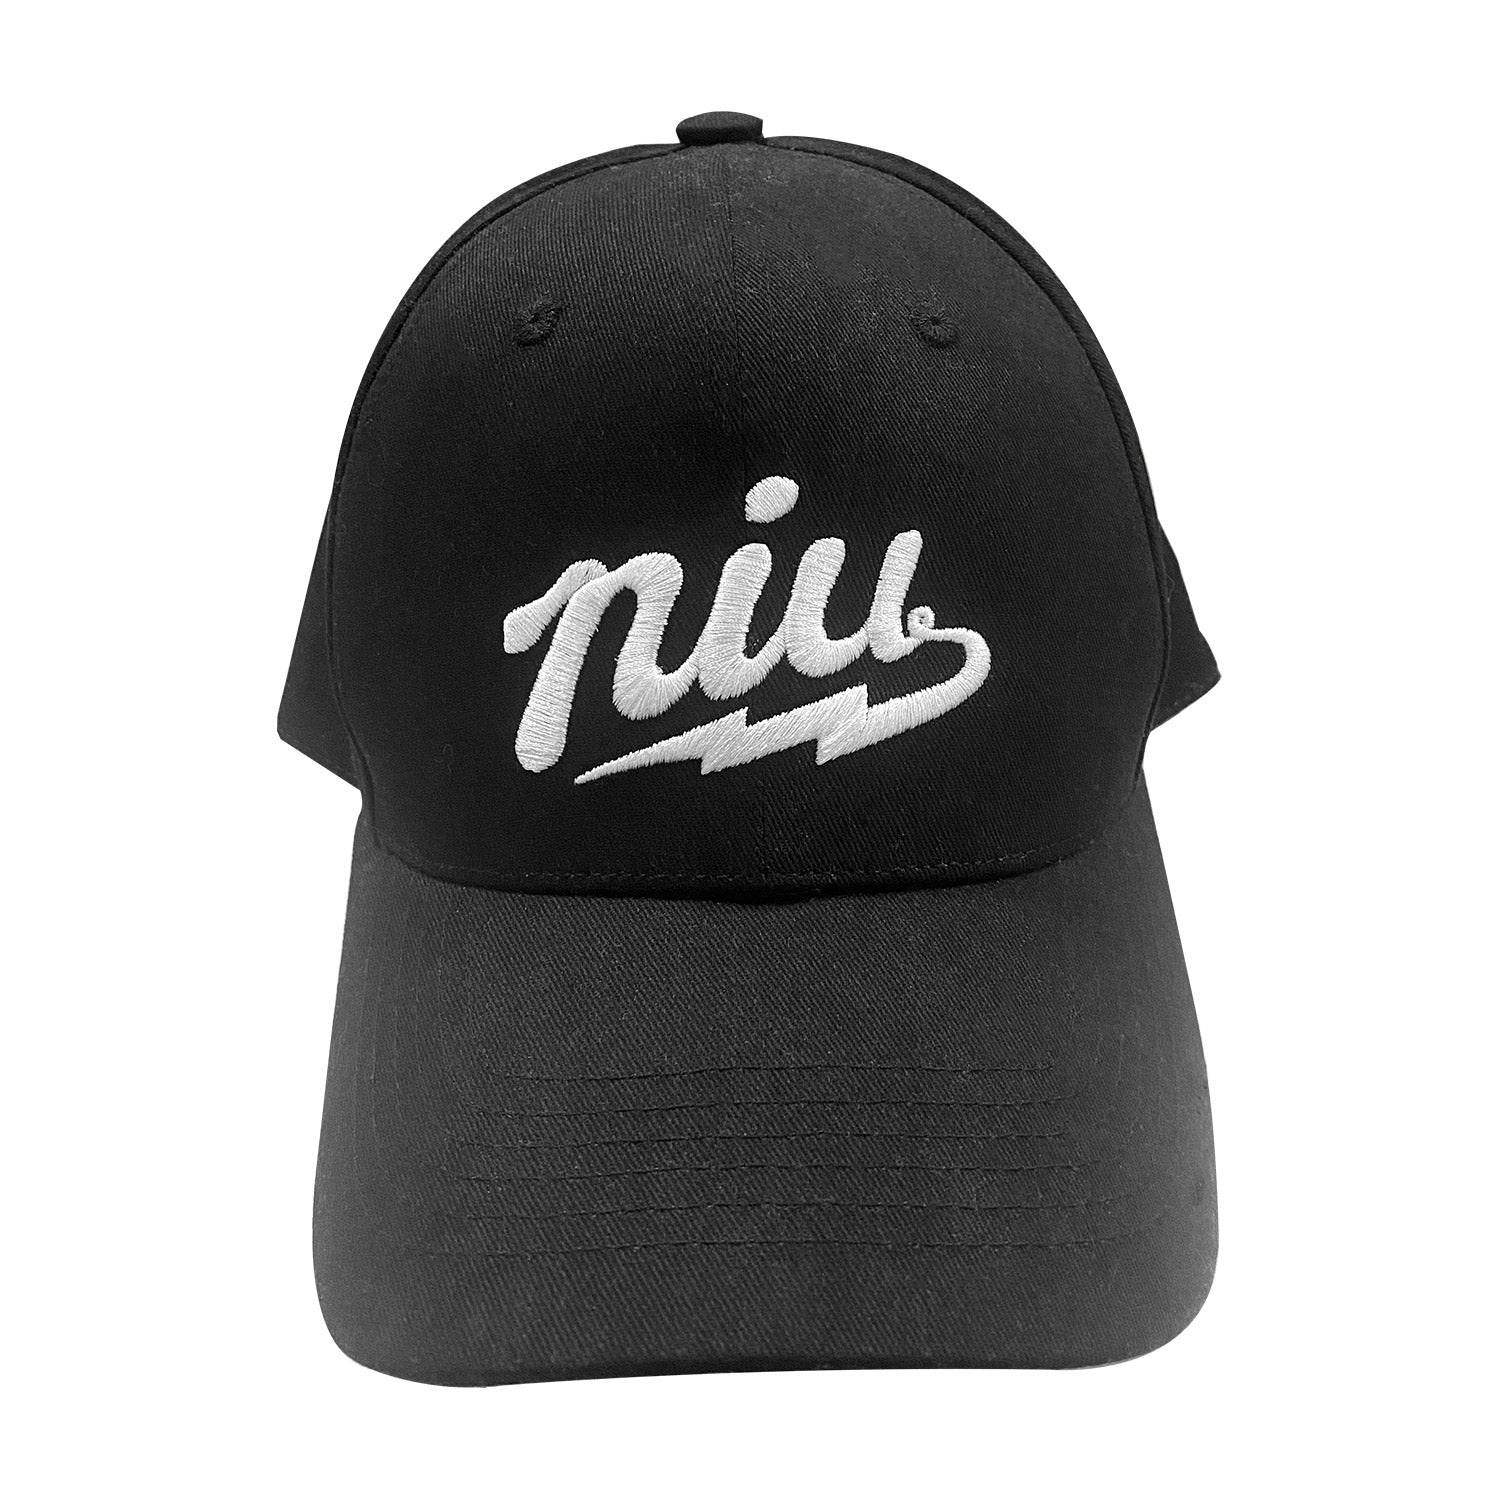 NIU Cap Limited-edition